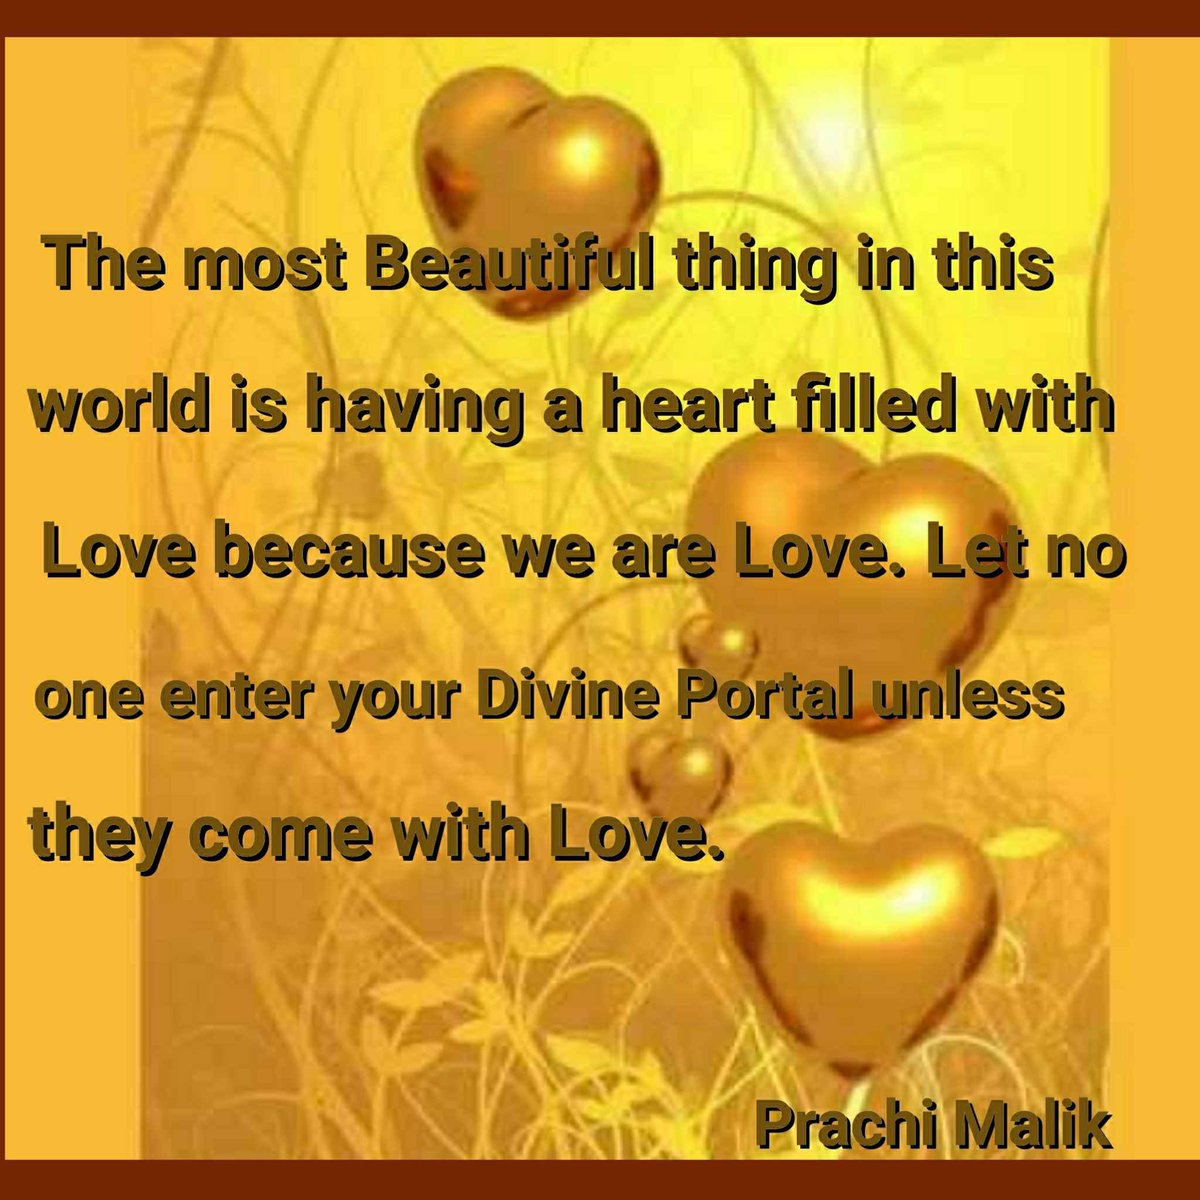 @gede_prama @KariJoys @AngelHealingArt @Conduru @loveGoldenHeart @PlumVillage @Dianne__LadyD @ReikiArthur @RedMajid @Inspireu2Action @JanetNestor @BabyGo2014 @DalaiLama @BarackObama Happy Thursday, Guruji and friends!
#Love is the answer!
❤️❤️❤️❤️❤️❤️❤️❤️
#IDWP
#RainKindness
#UnconditionalUniversalService #UUS
#JoyTrain
#ISM
#Mindfulness
#BabyGo
#ChooseLove
#LUTL
#MentalHealth
#MentslHealth